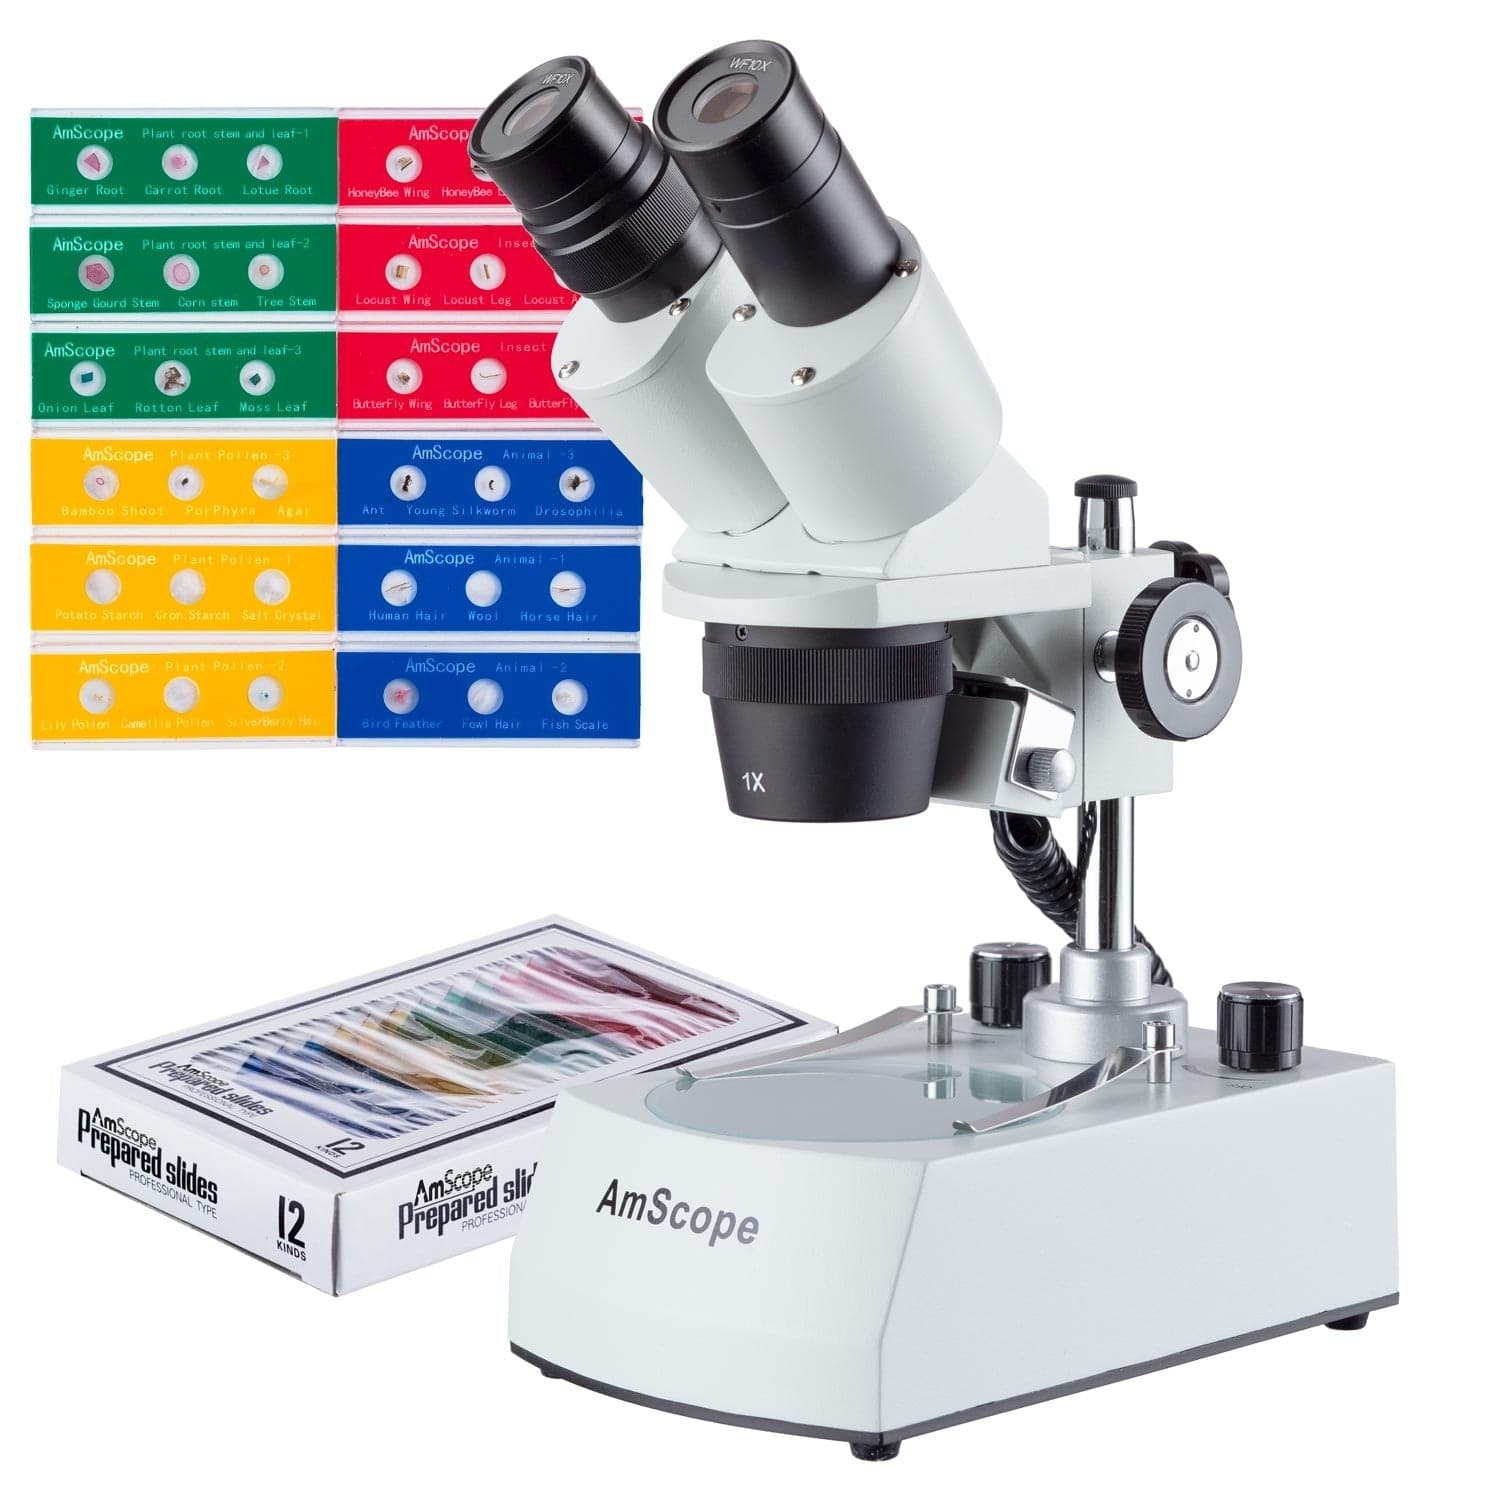 AmScope SE306 Series Compact Multi-Lens Binocular Stereo Microscope 20